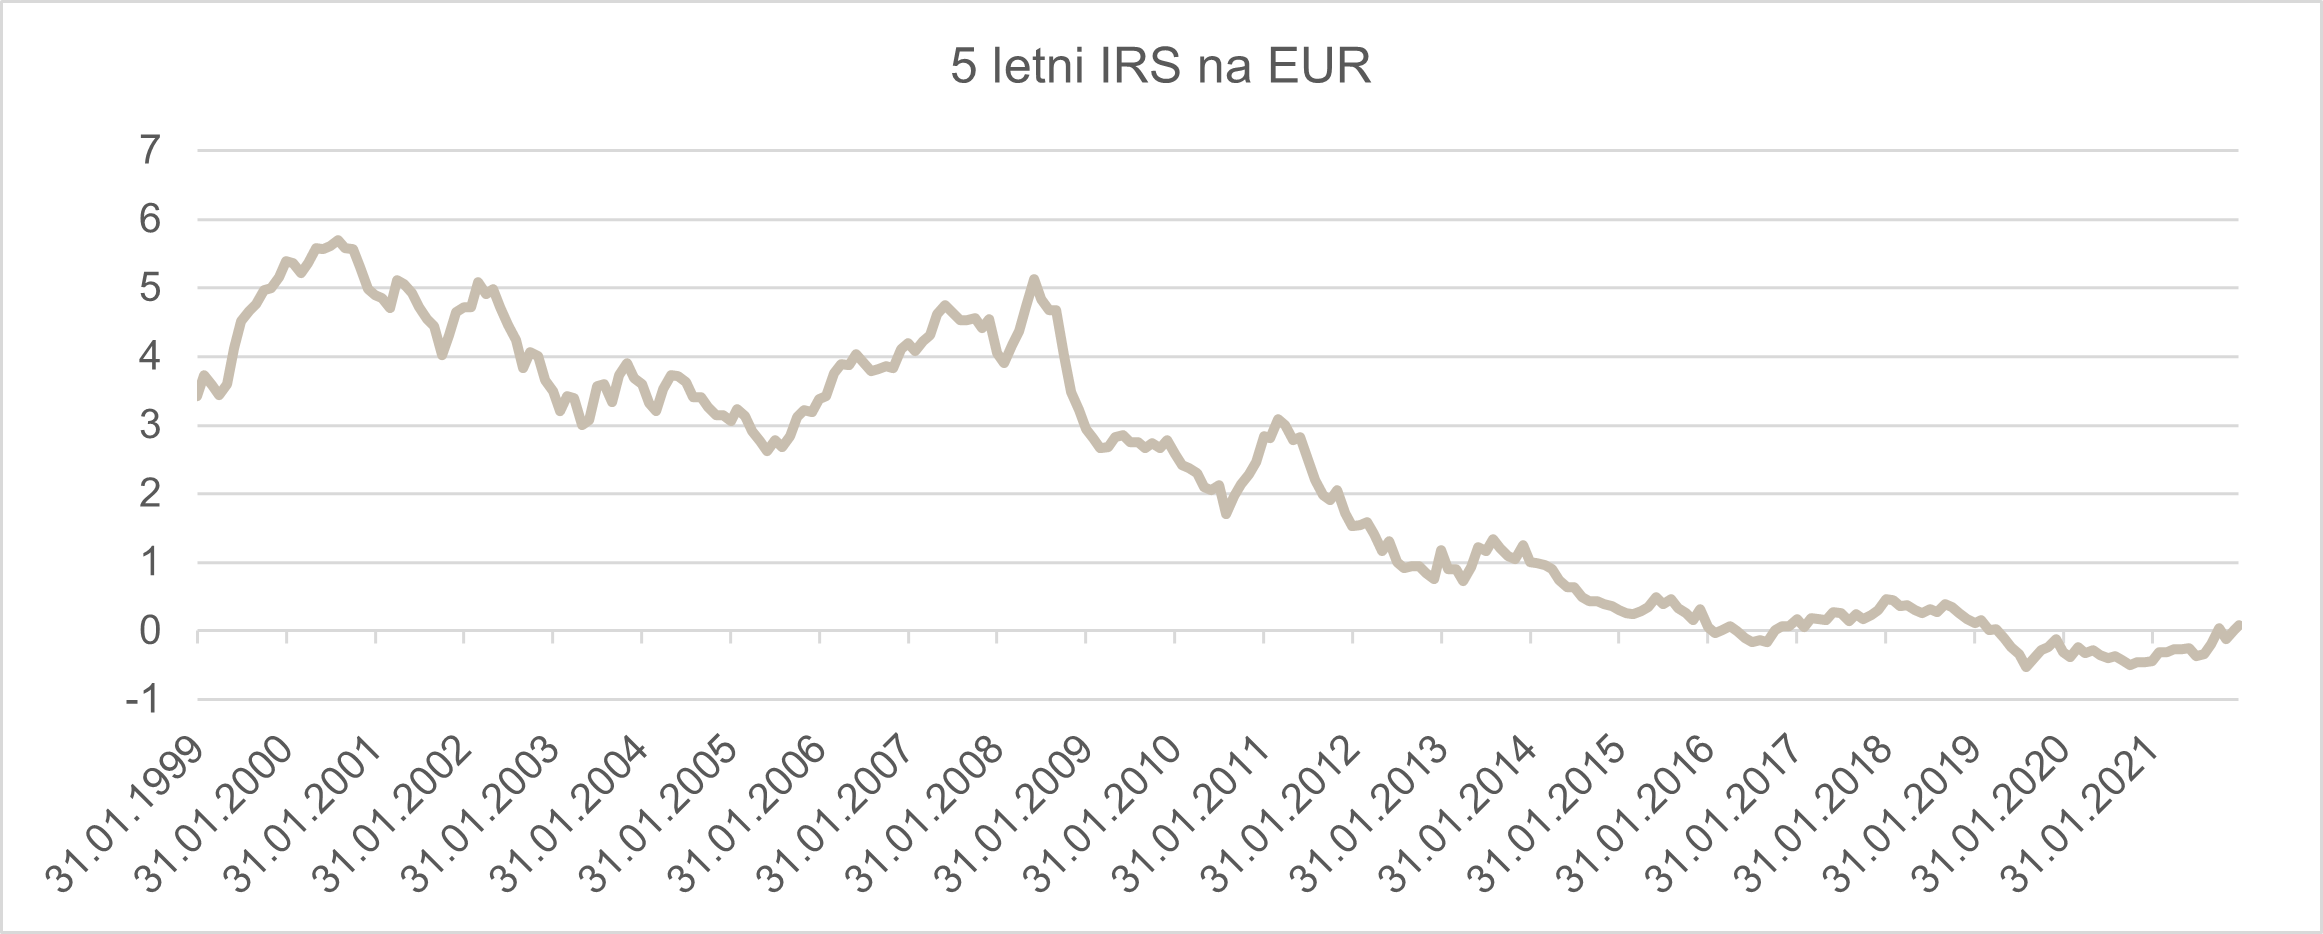 5 letni IRS na EUR